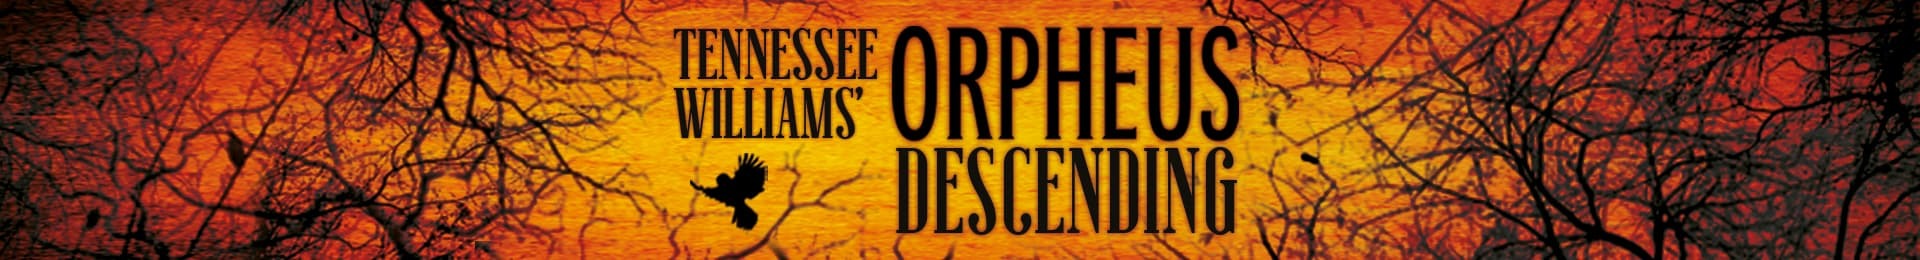 Orpheus Descending banner image